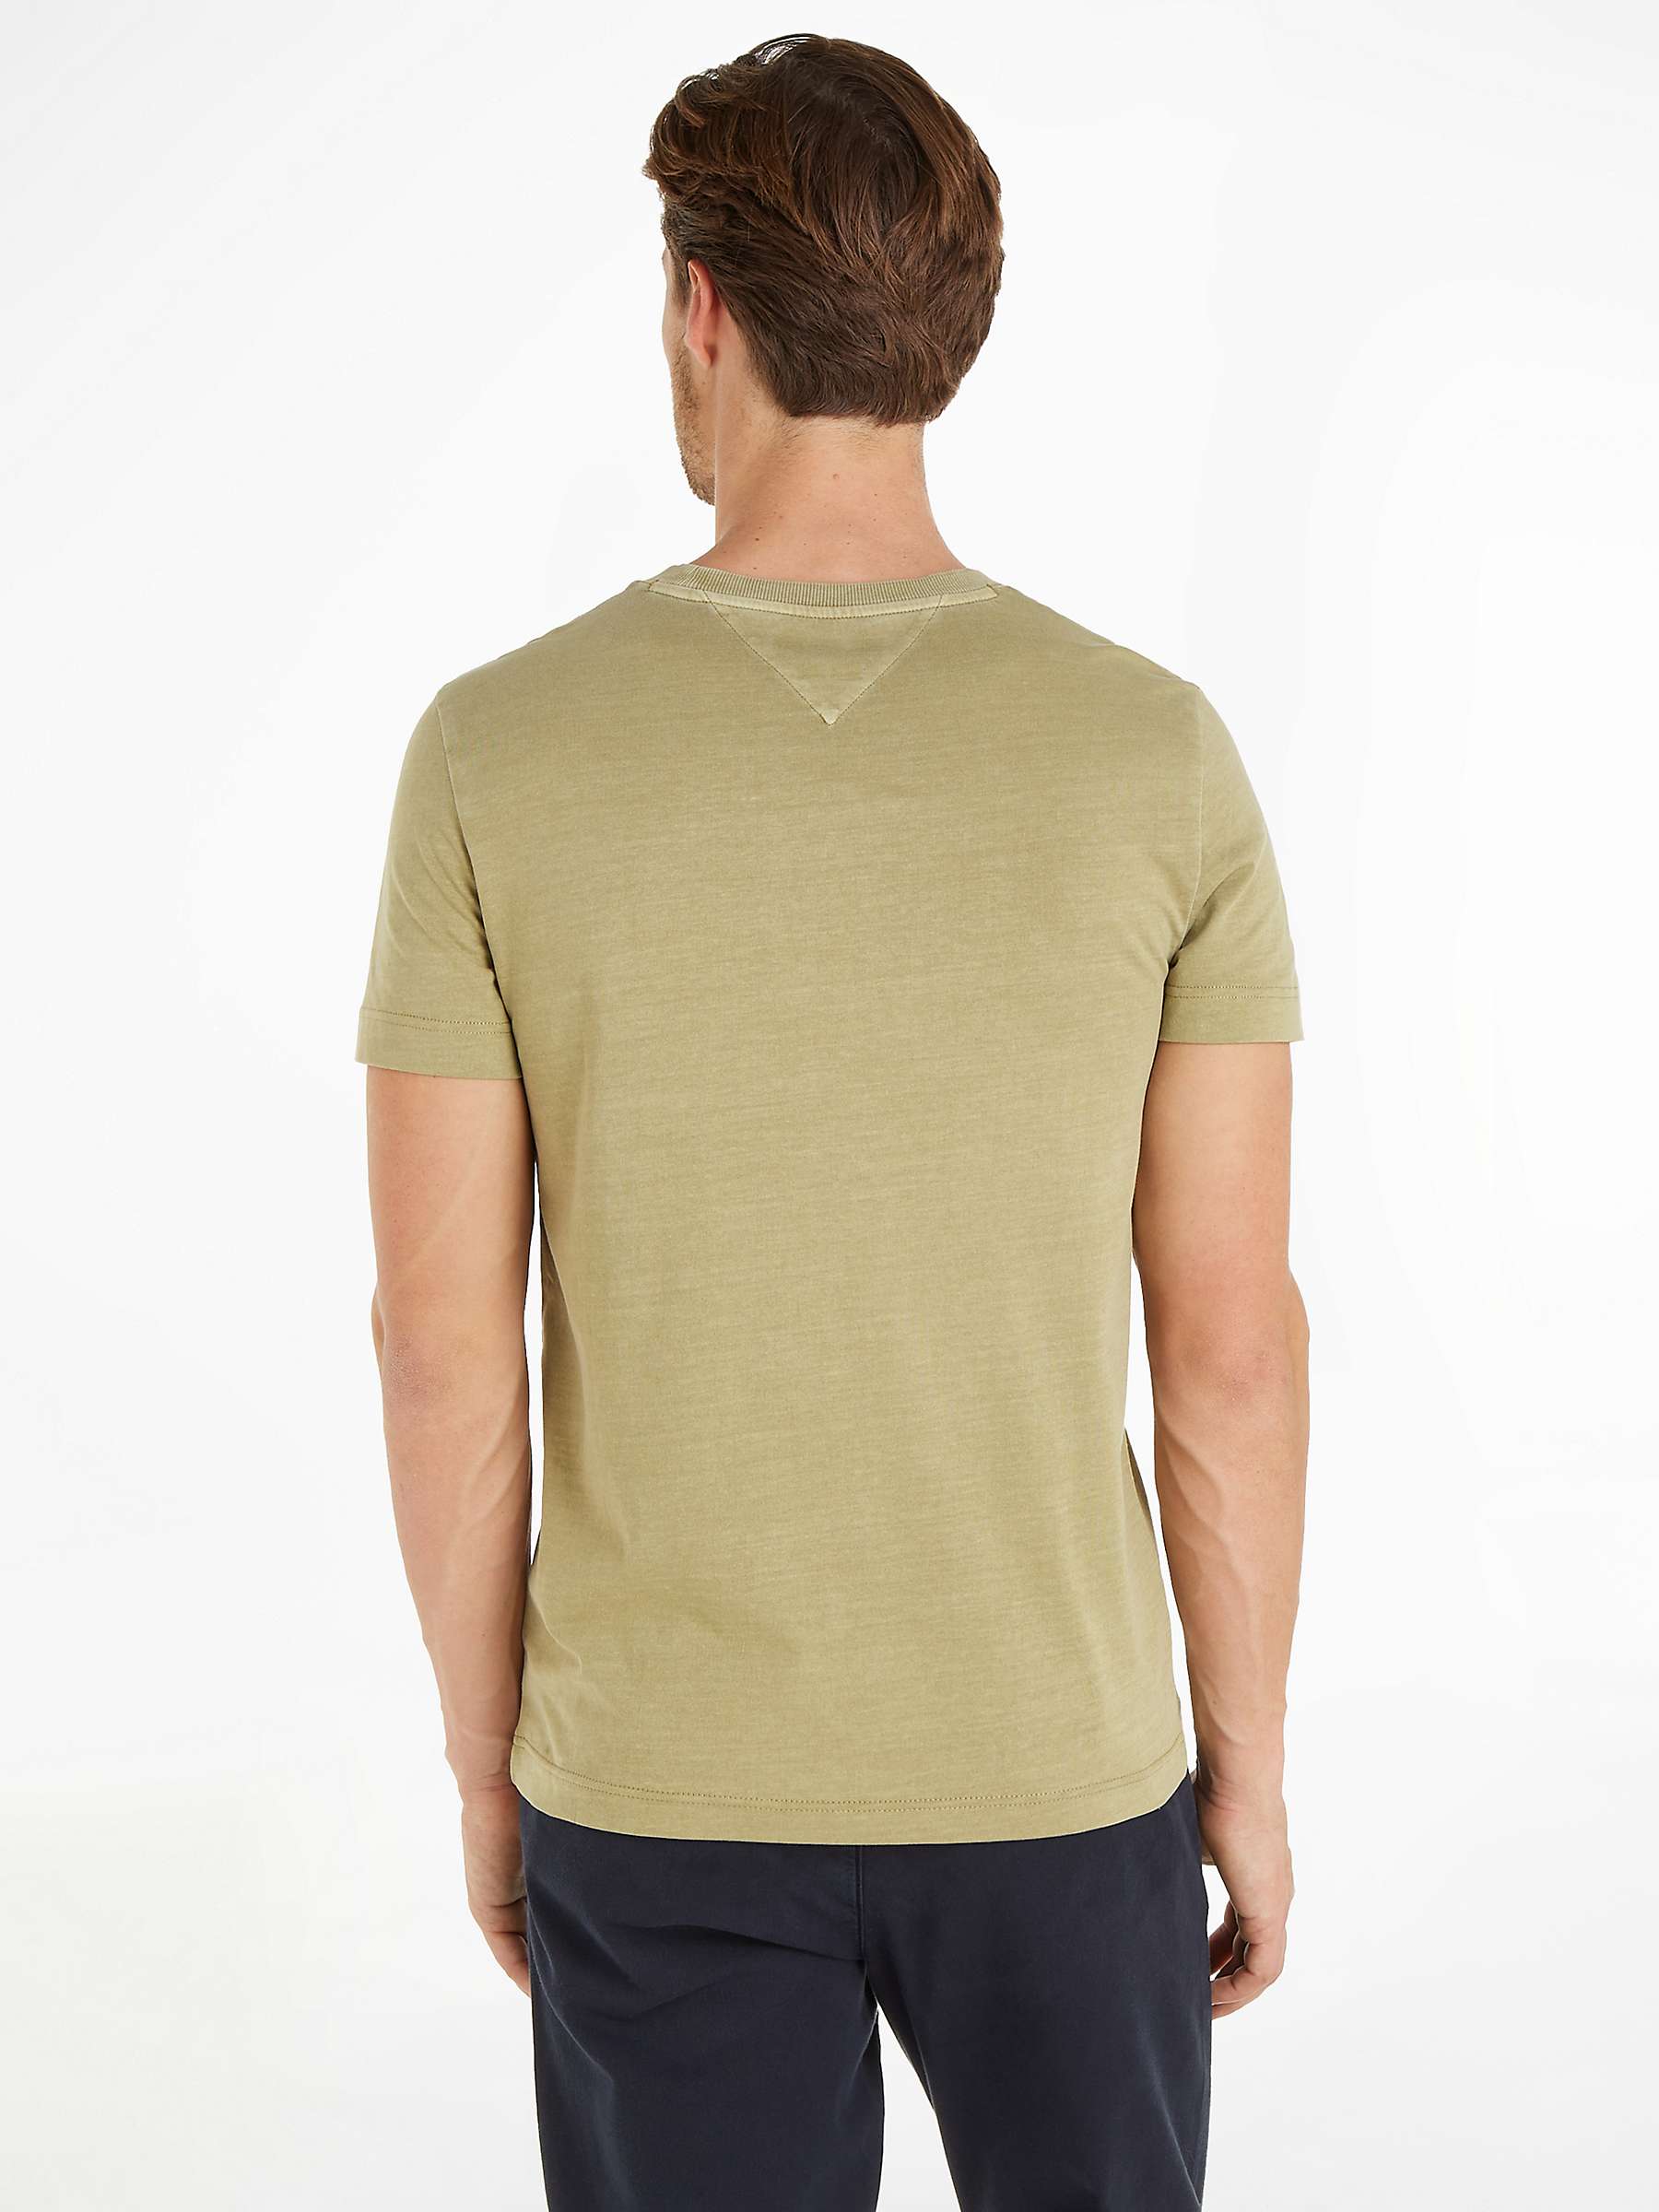 Buy Tommy Hilfiger Garment Dye Logo T-Shirt Online at johnlewis.com